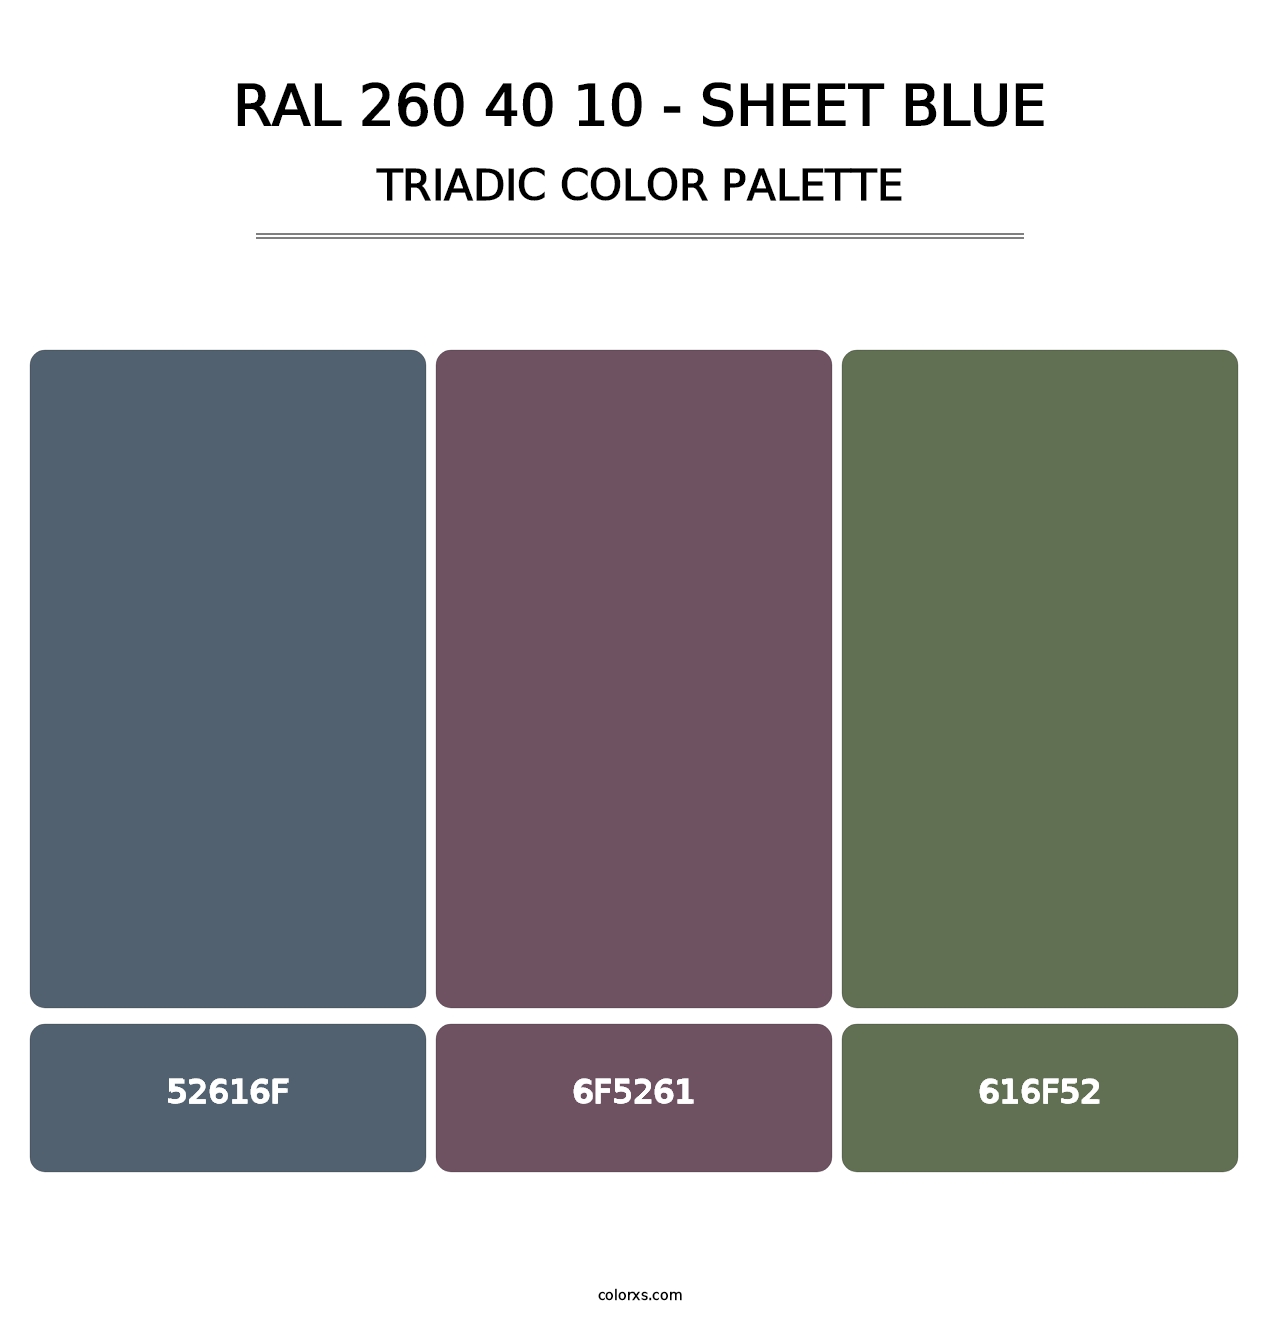 RAL 260 40 10 - Sheet Blue - Triadic Color Palette